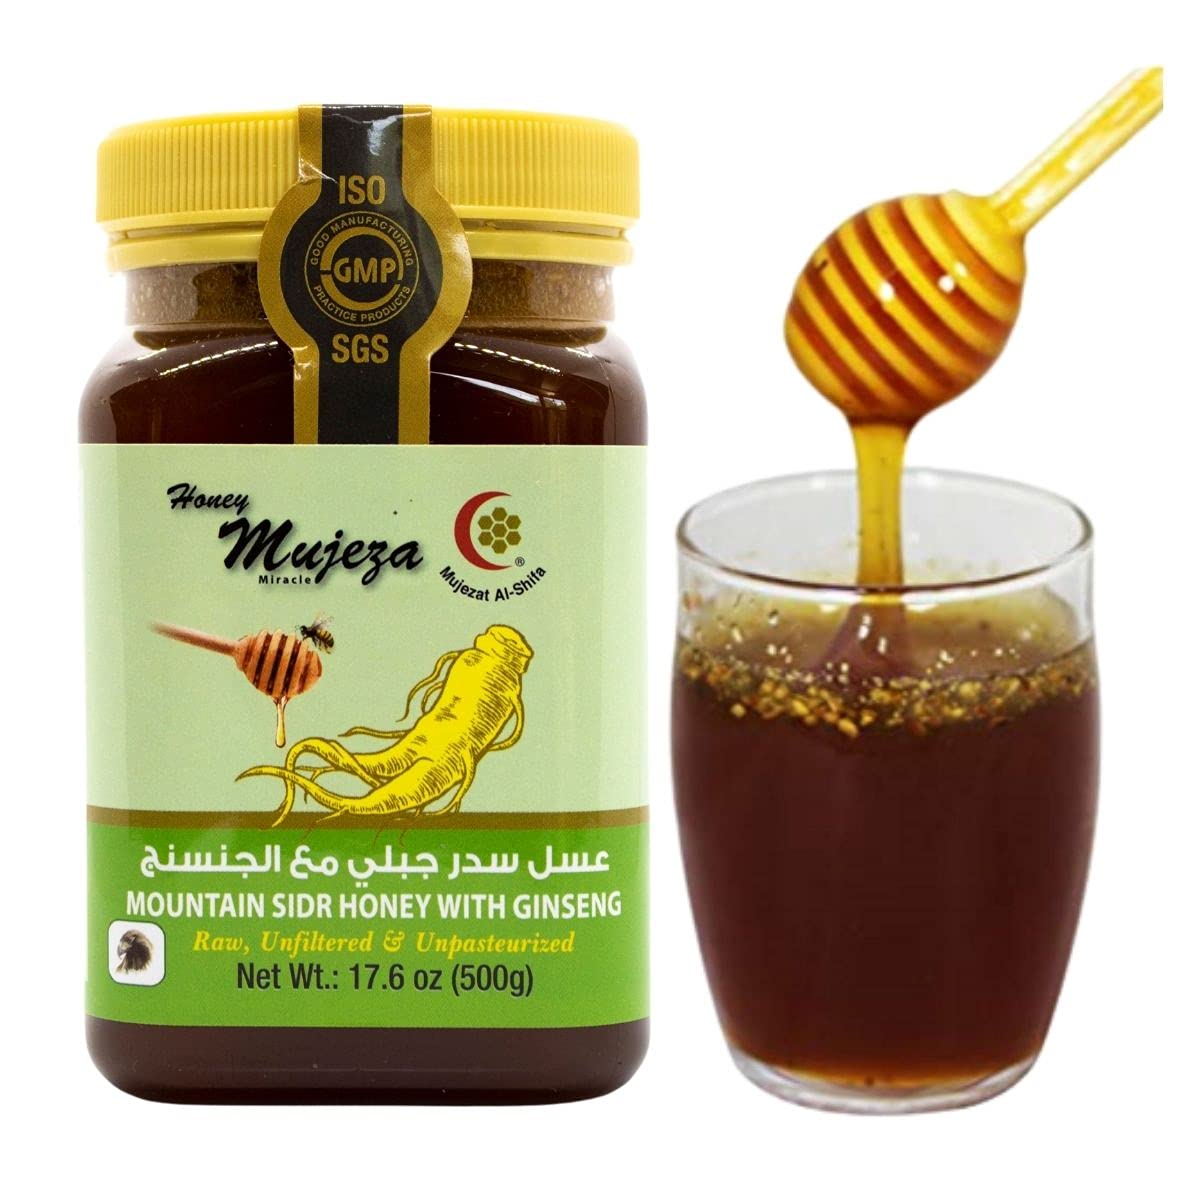 Mujeza Raw Mountain Sidr Honey with Red Korean Ginseng Royal Jelly Bee Propolis Palm Pollen Black Seed Powder 500g/17.6oz - Immune Booster, Sugar & Gluten Free - Men & Women - Mujezat Al-Shifa